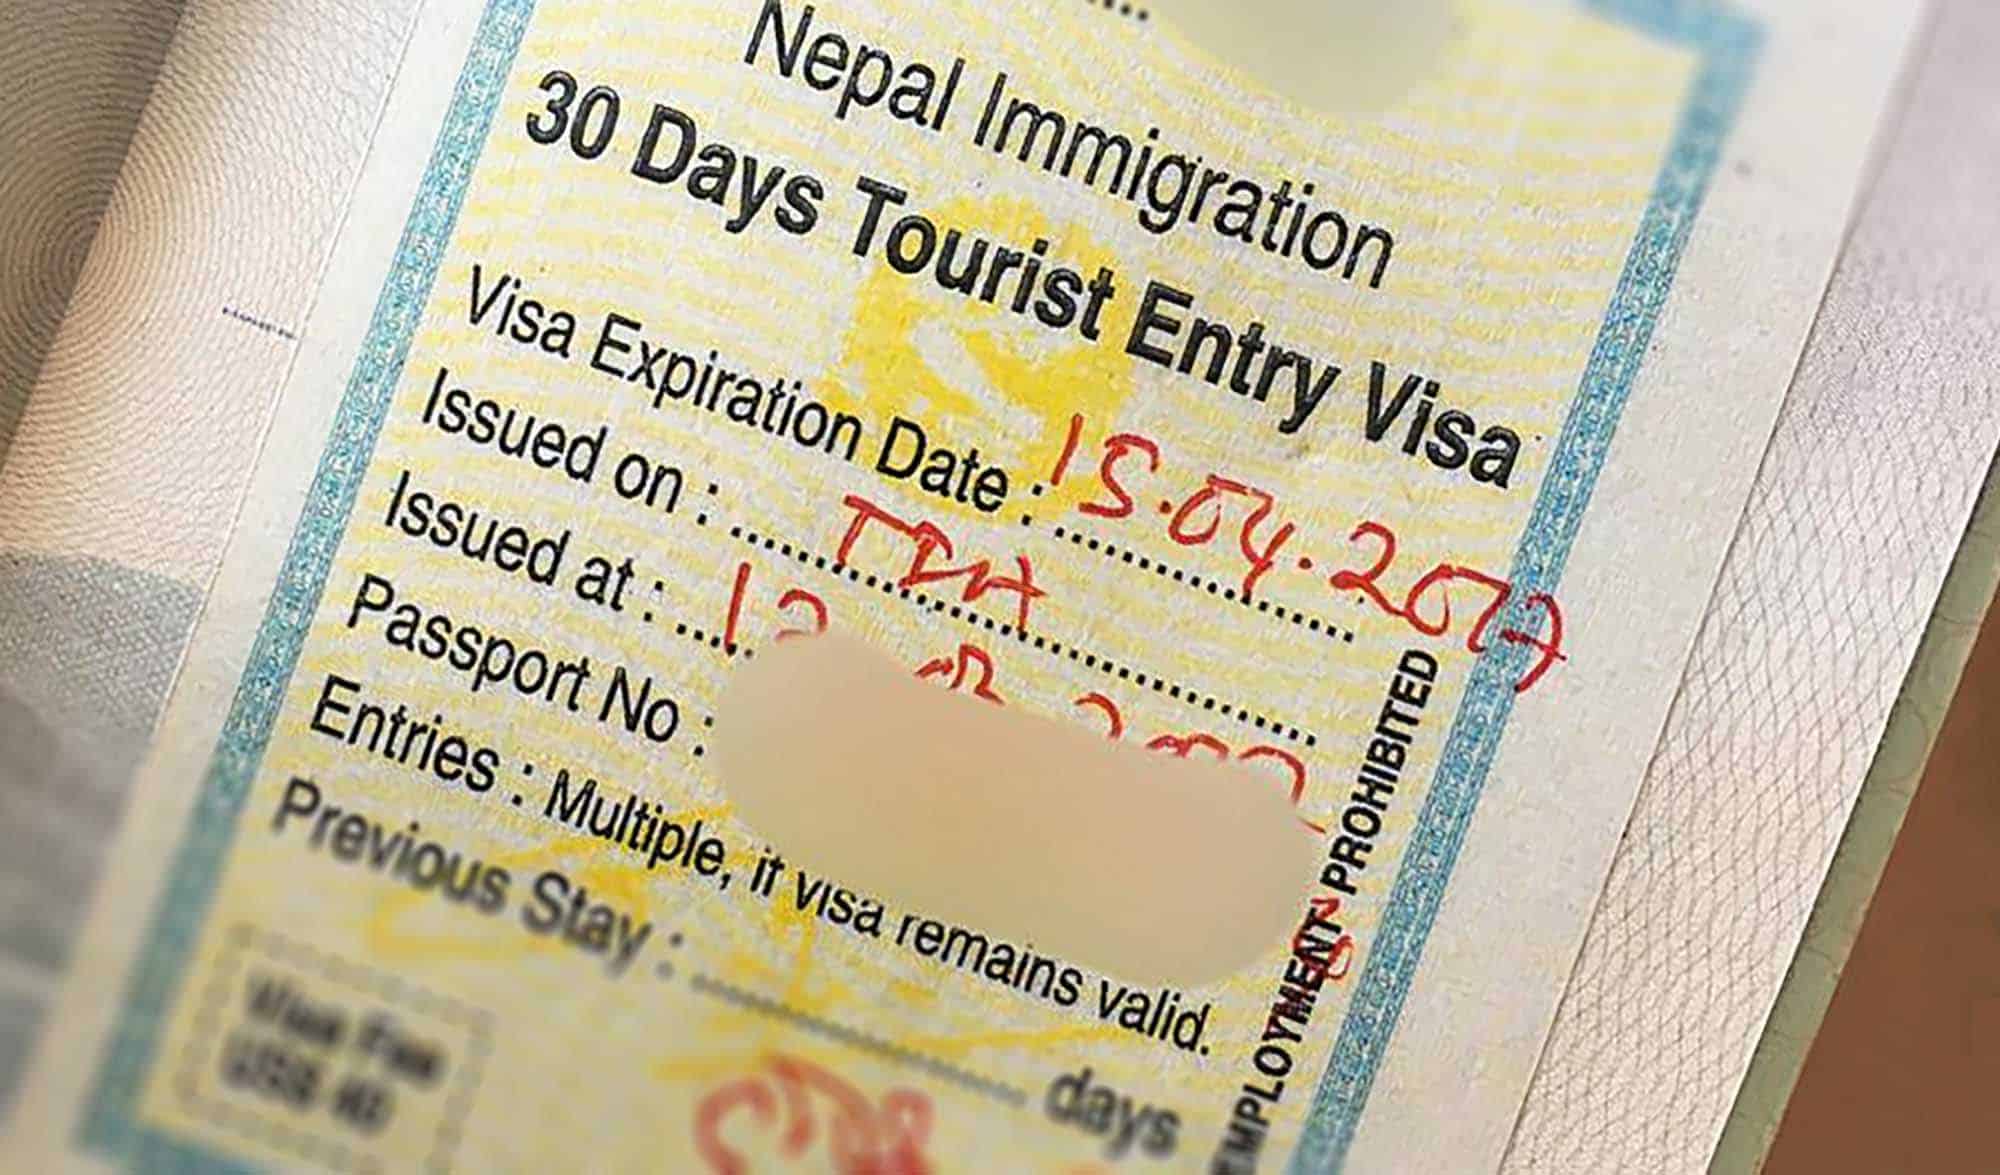 Nepal Tourist Visa Image